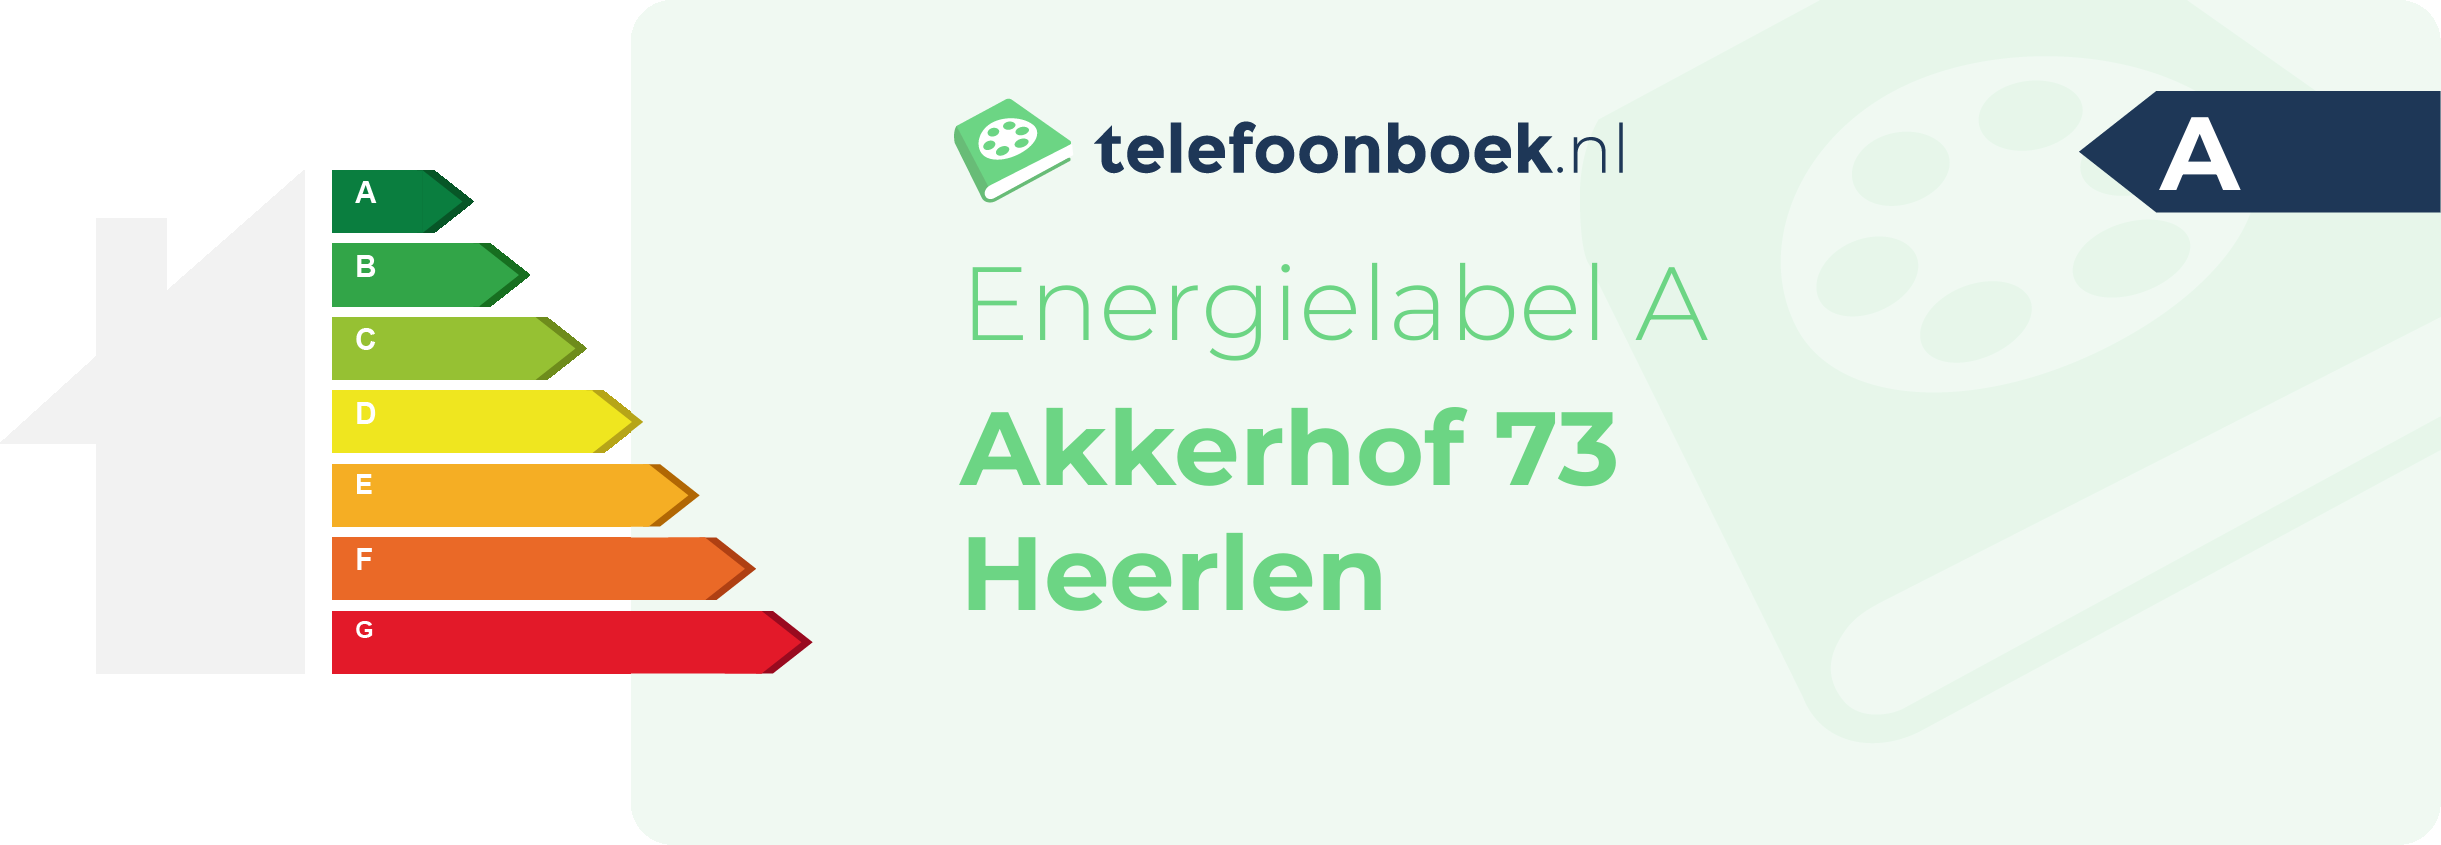 Energielabel Akkerhof 73 Heerlen